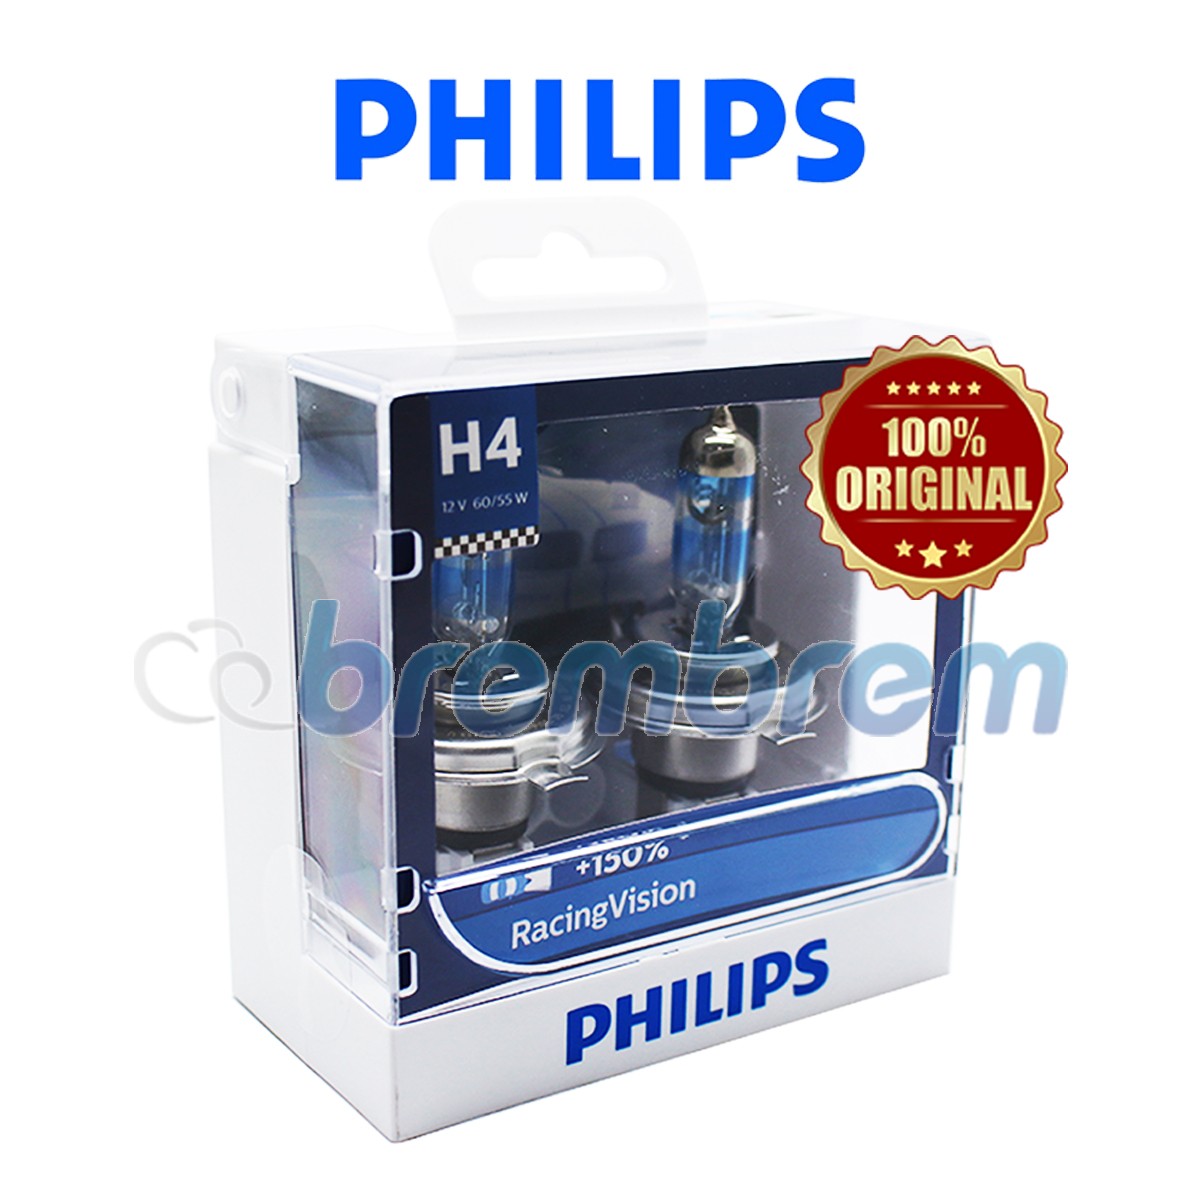 PHILIPS RACING VISION H4 - LAMPU HALOGEN